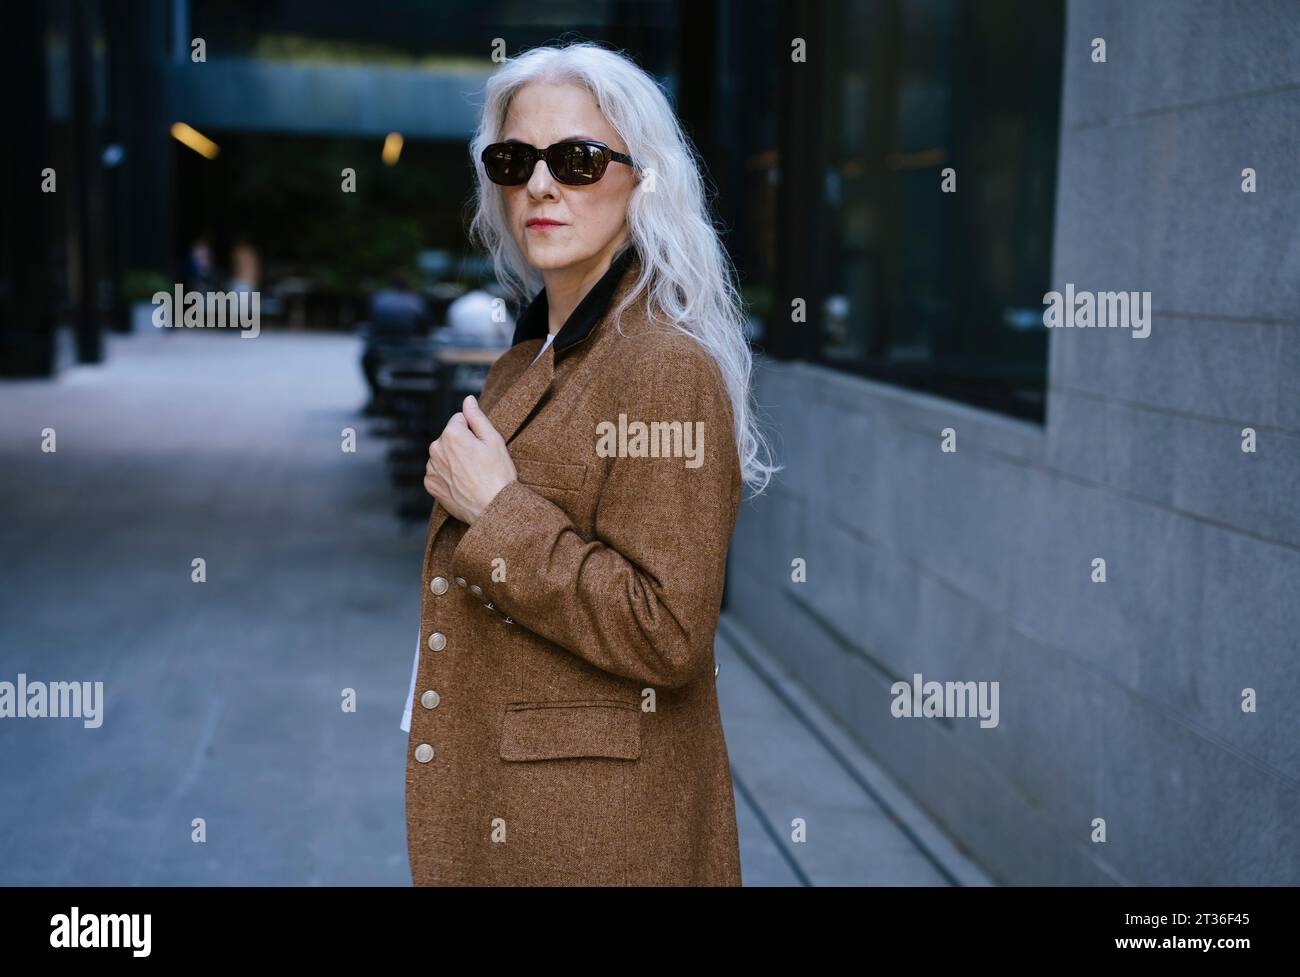 Businesswoman wearing brown jacket standing on street Stock Photo